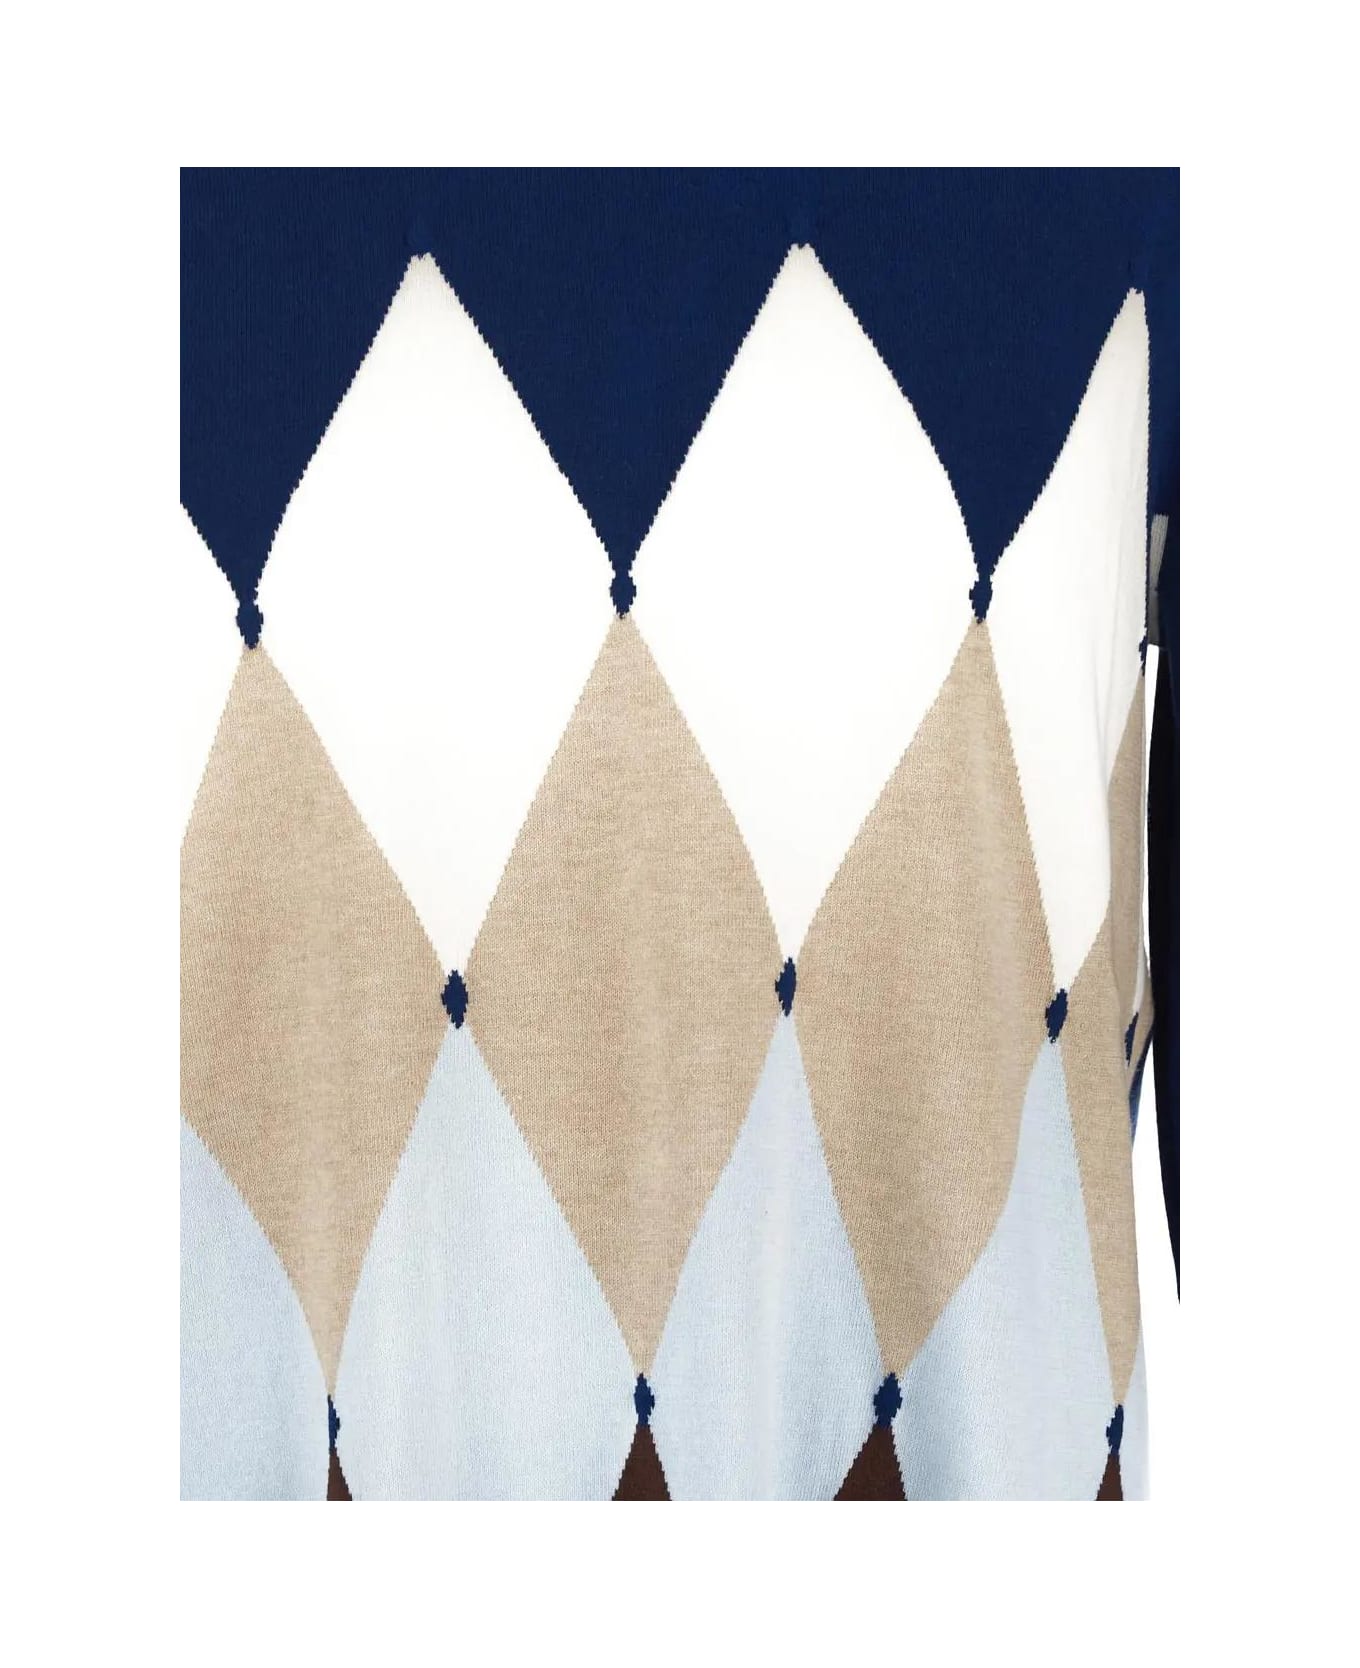 Ballantyne Geometric Pattern Sweater - ROYAL BLUE